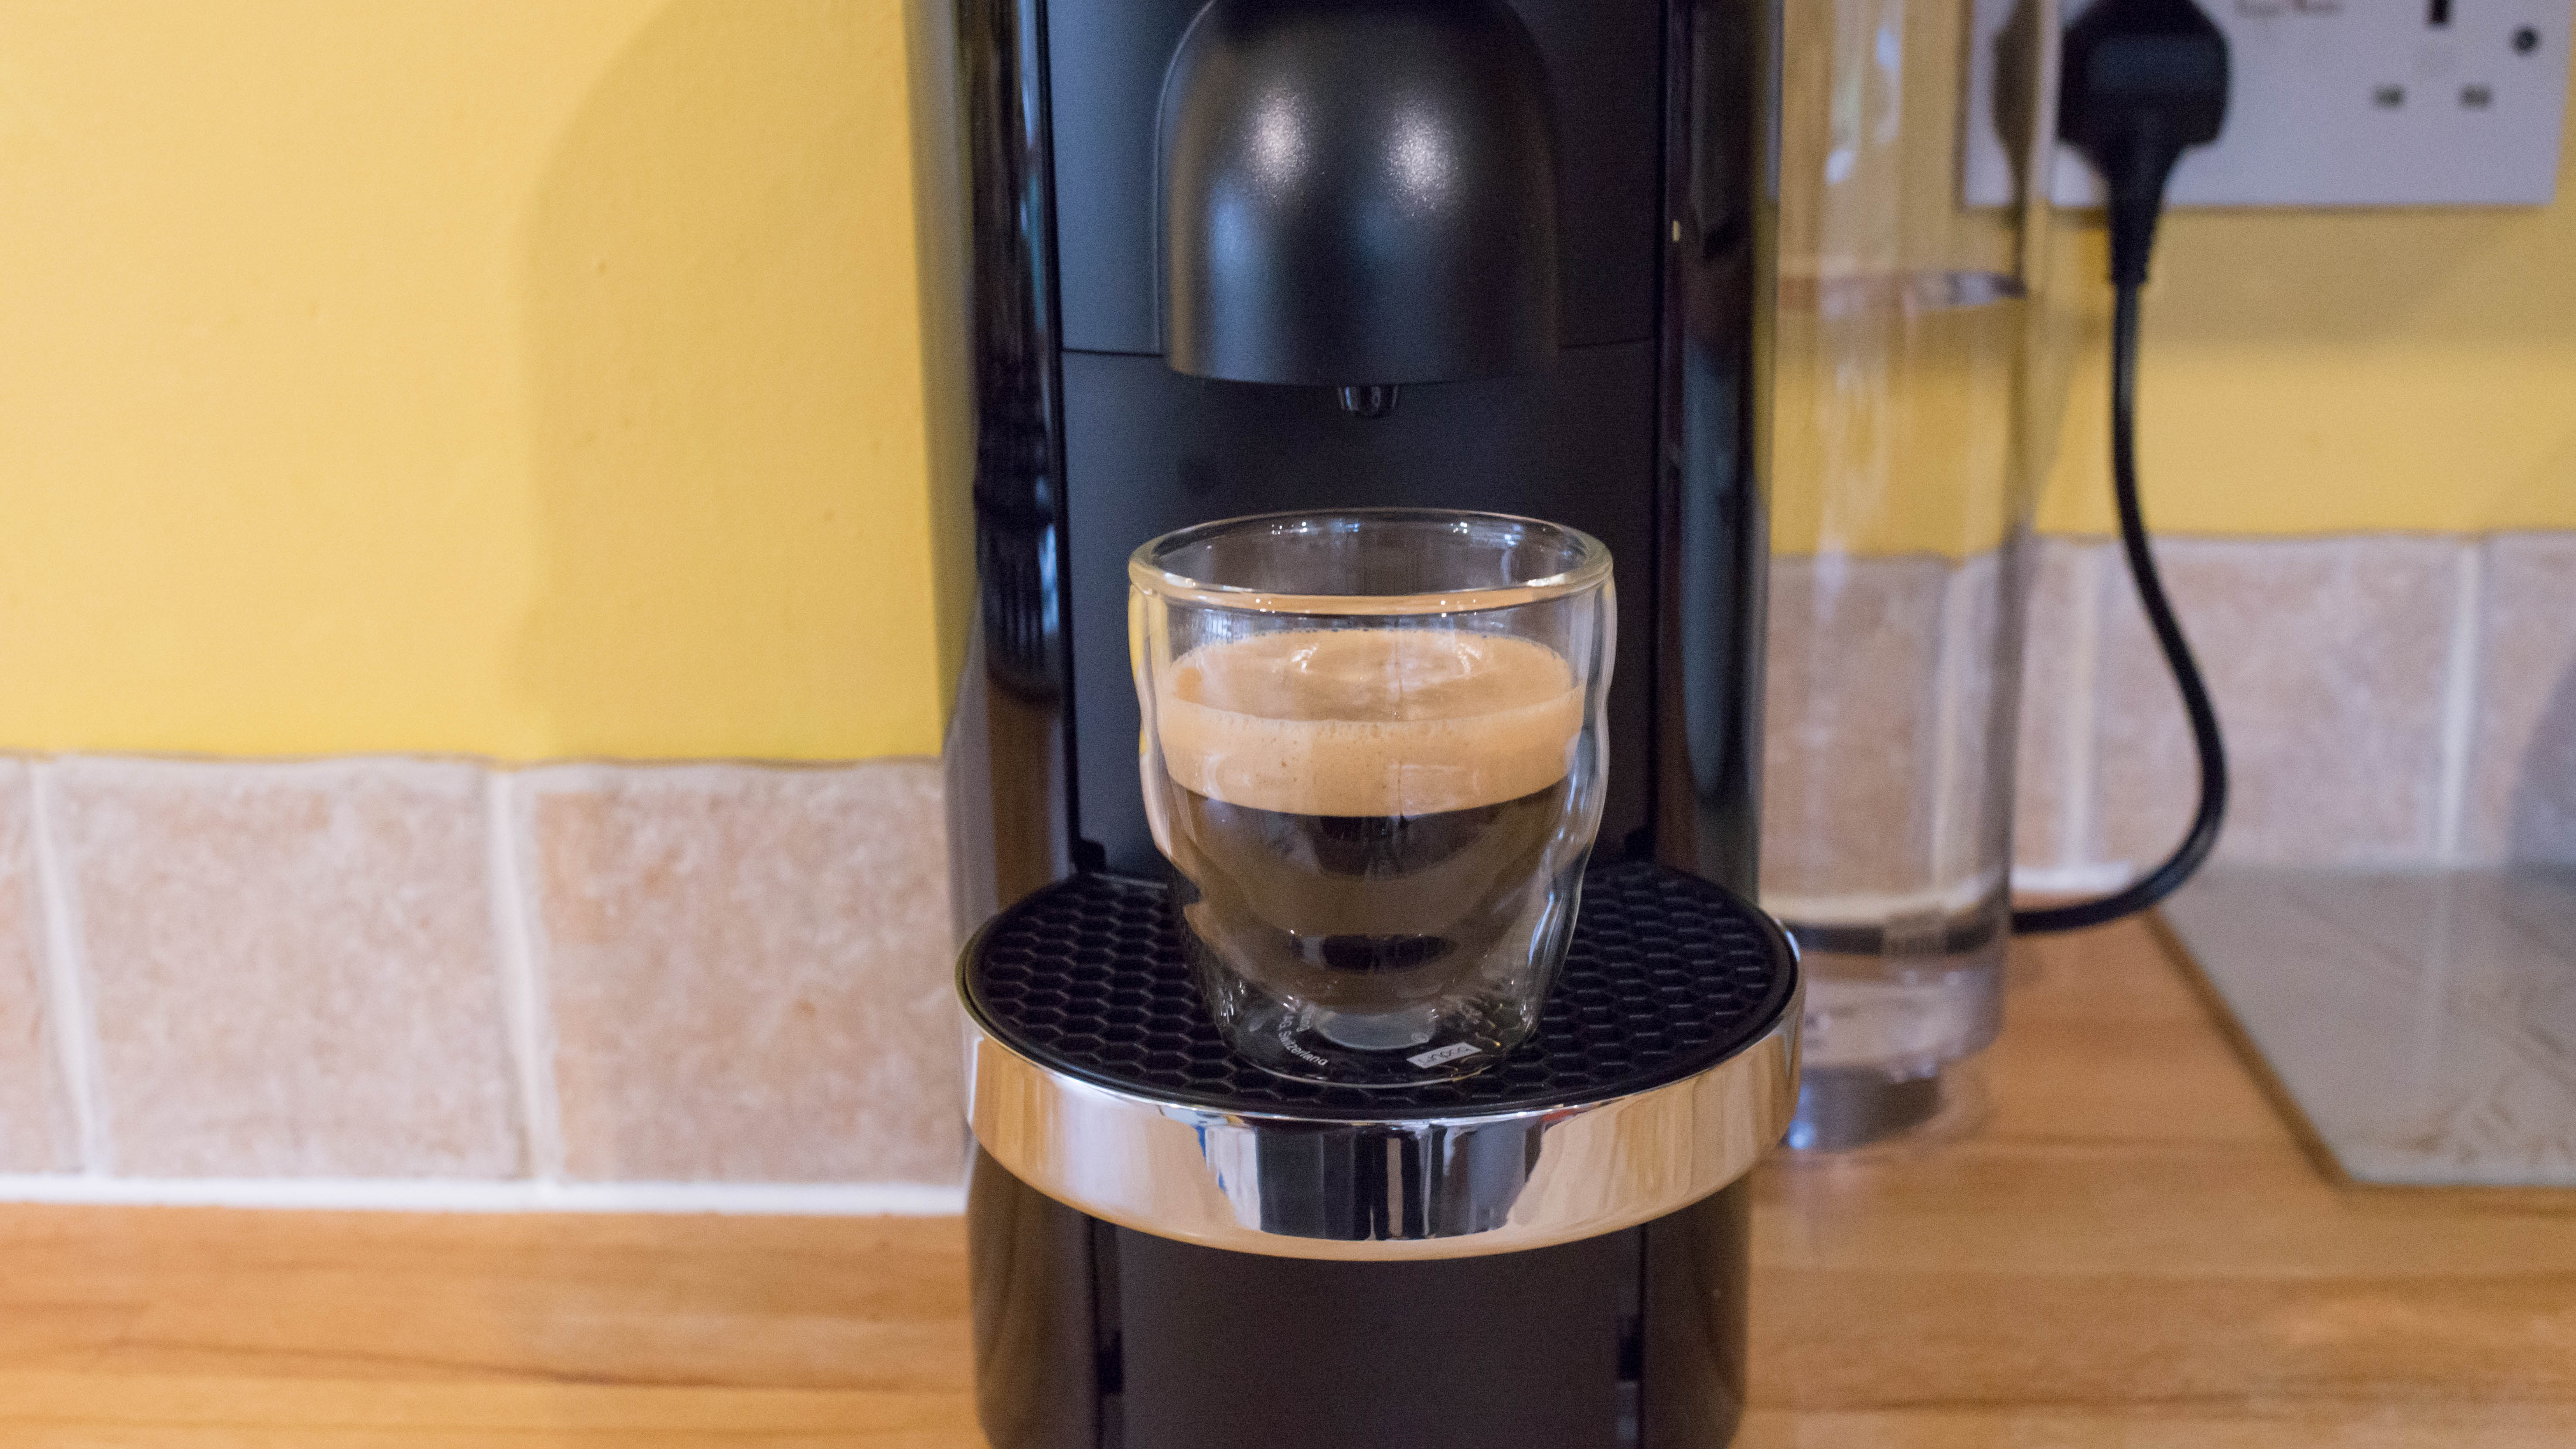 Nespresso Vertuo Plus machine with freshly brewed coffee.